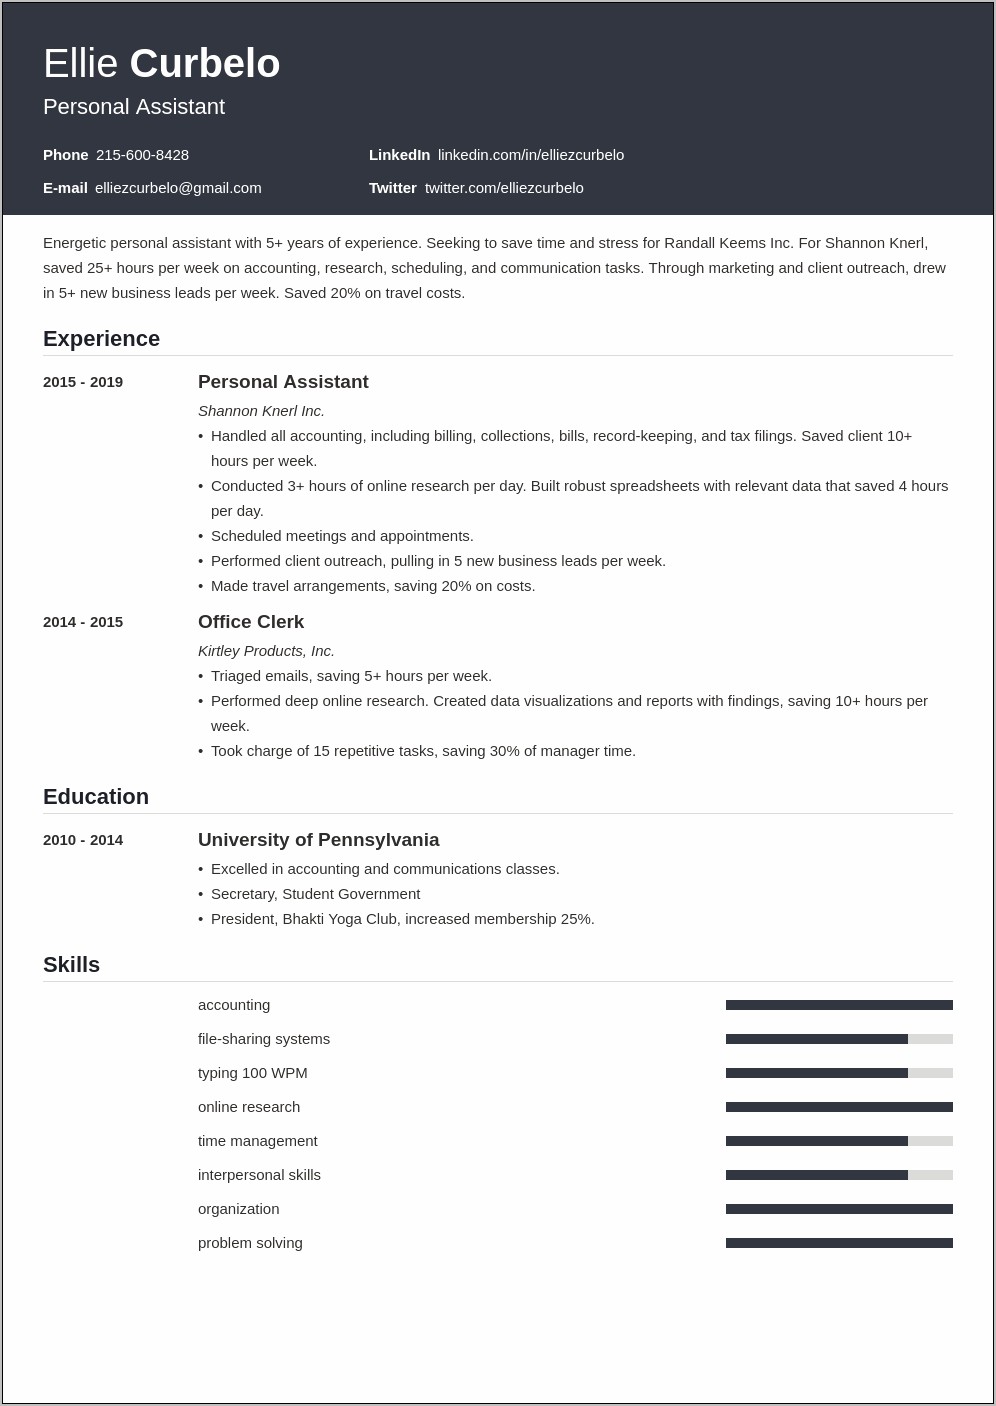 Job Description For Personal Assistant For Resume